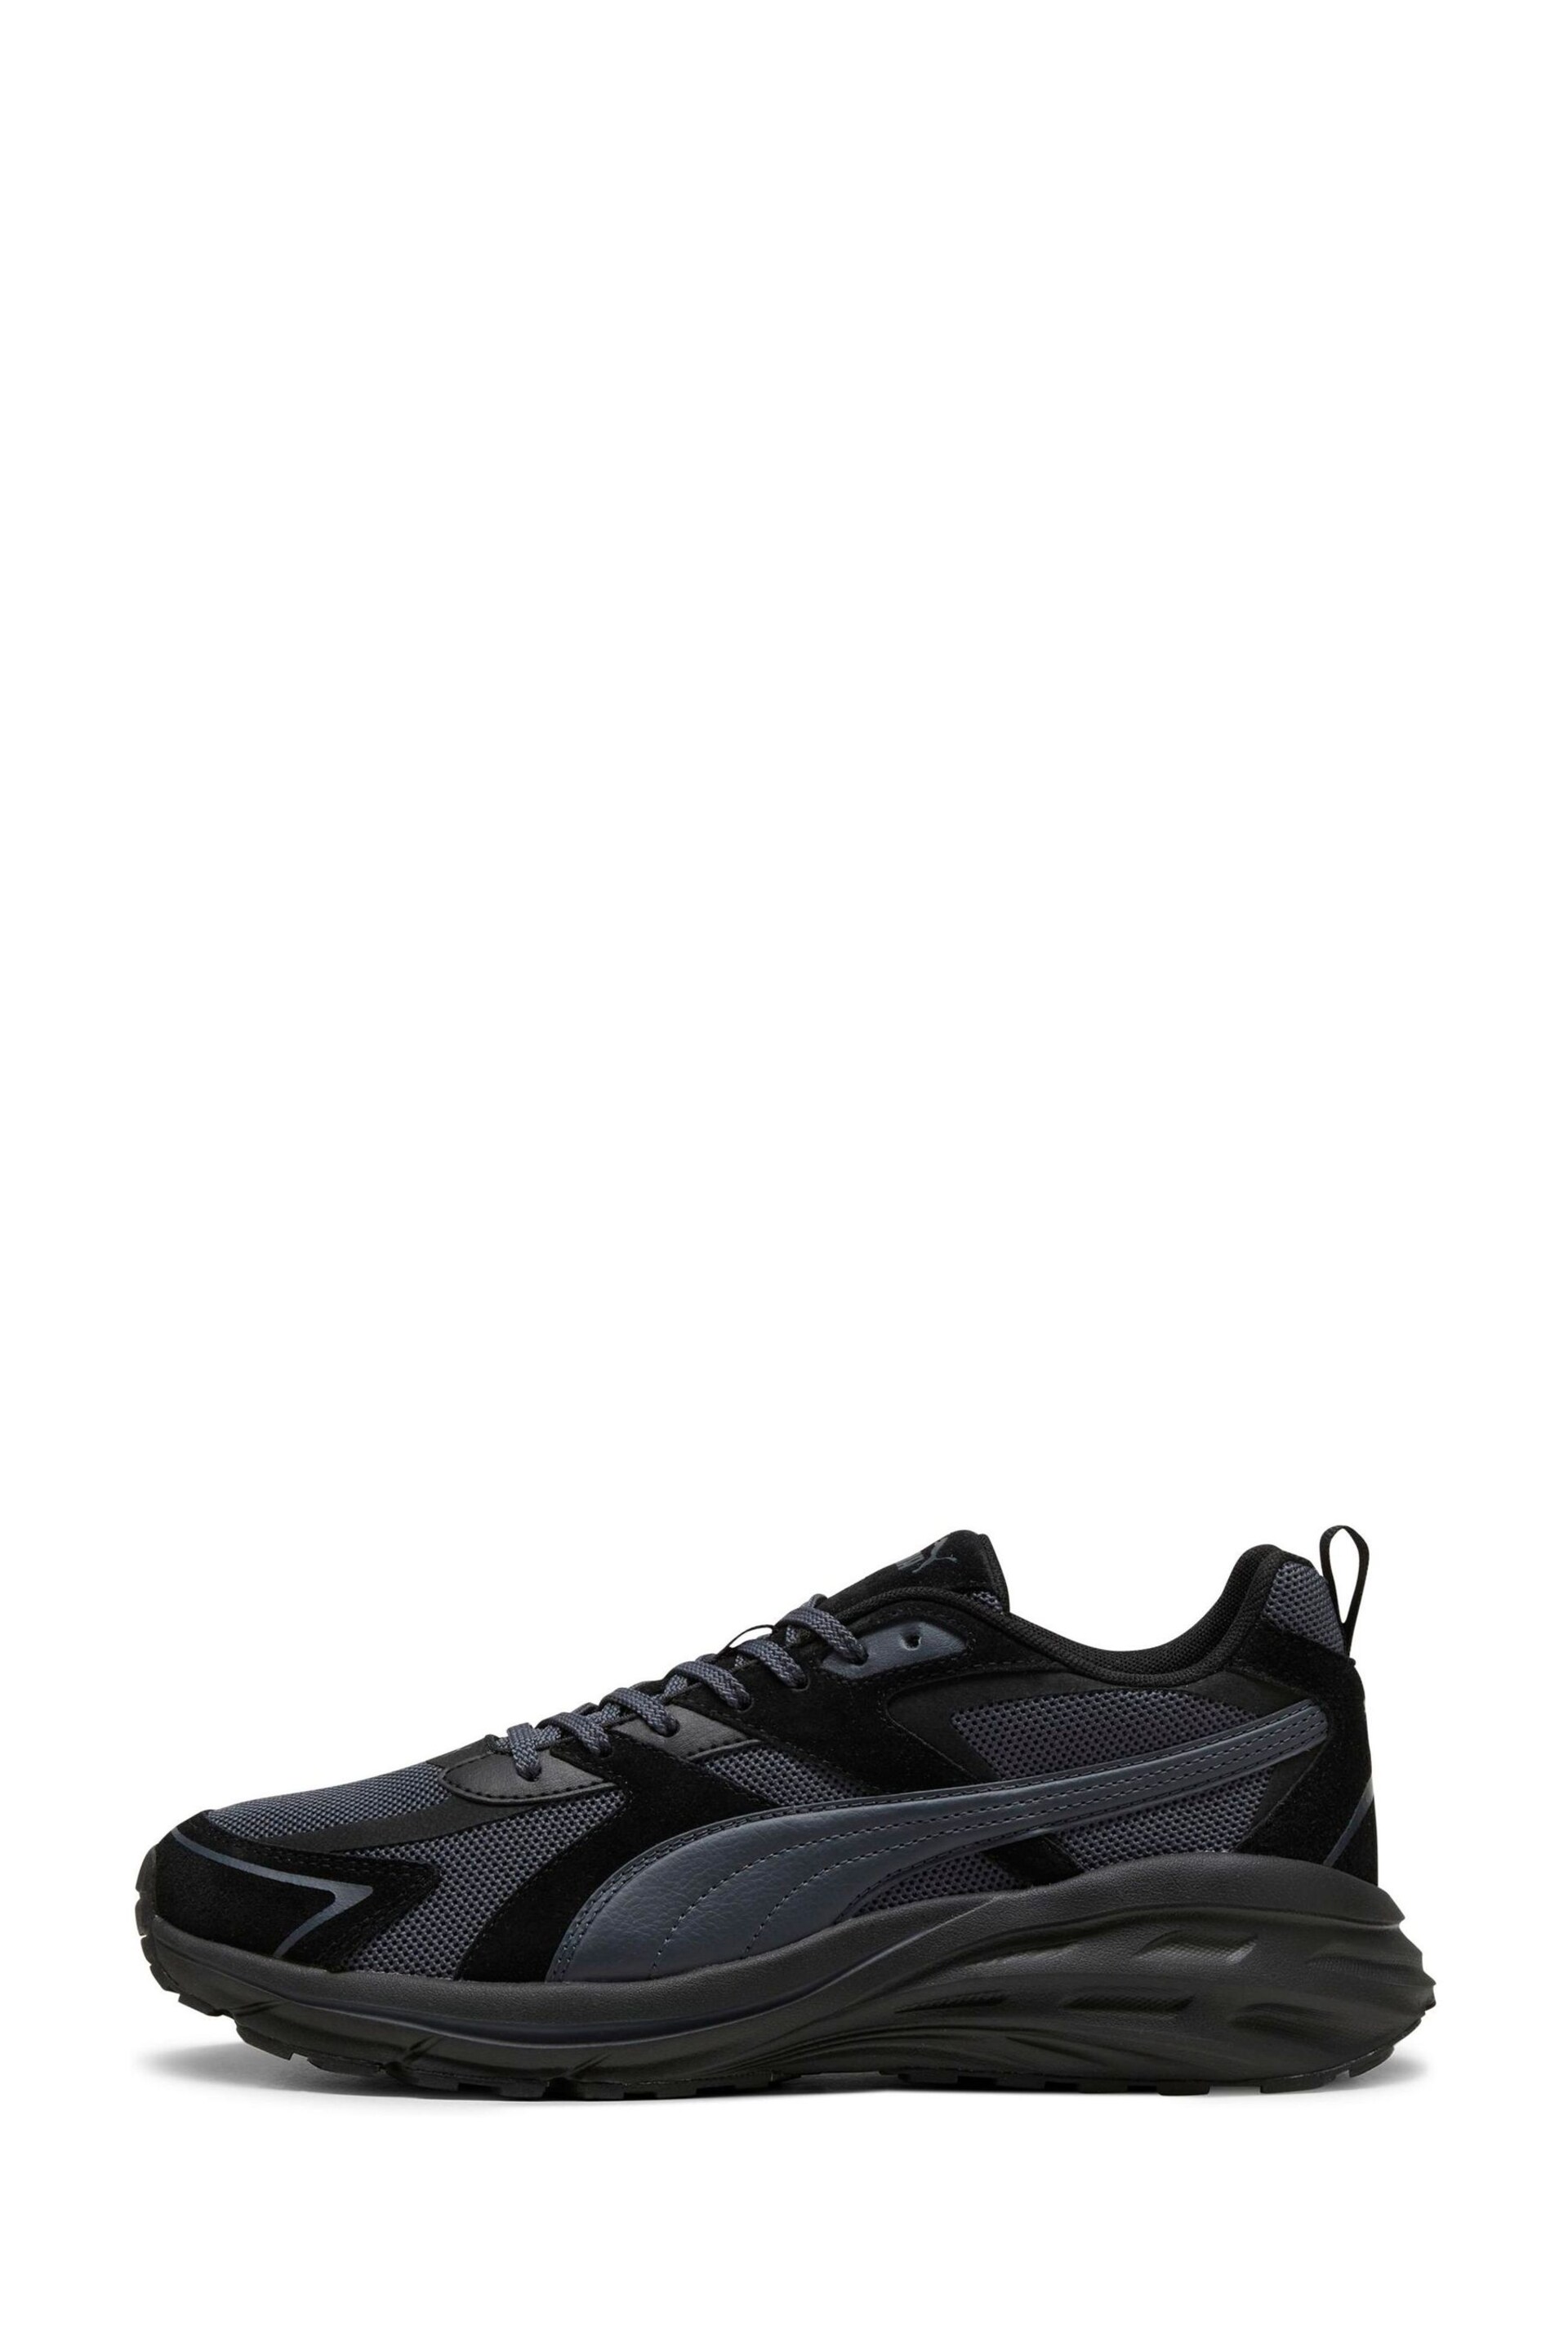 Puma Black Mens Hypnotic LS Sneakers - Image 2 of 6